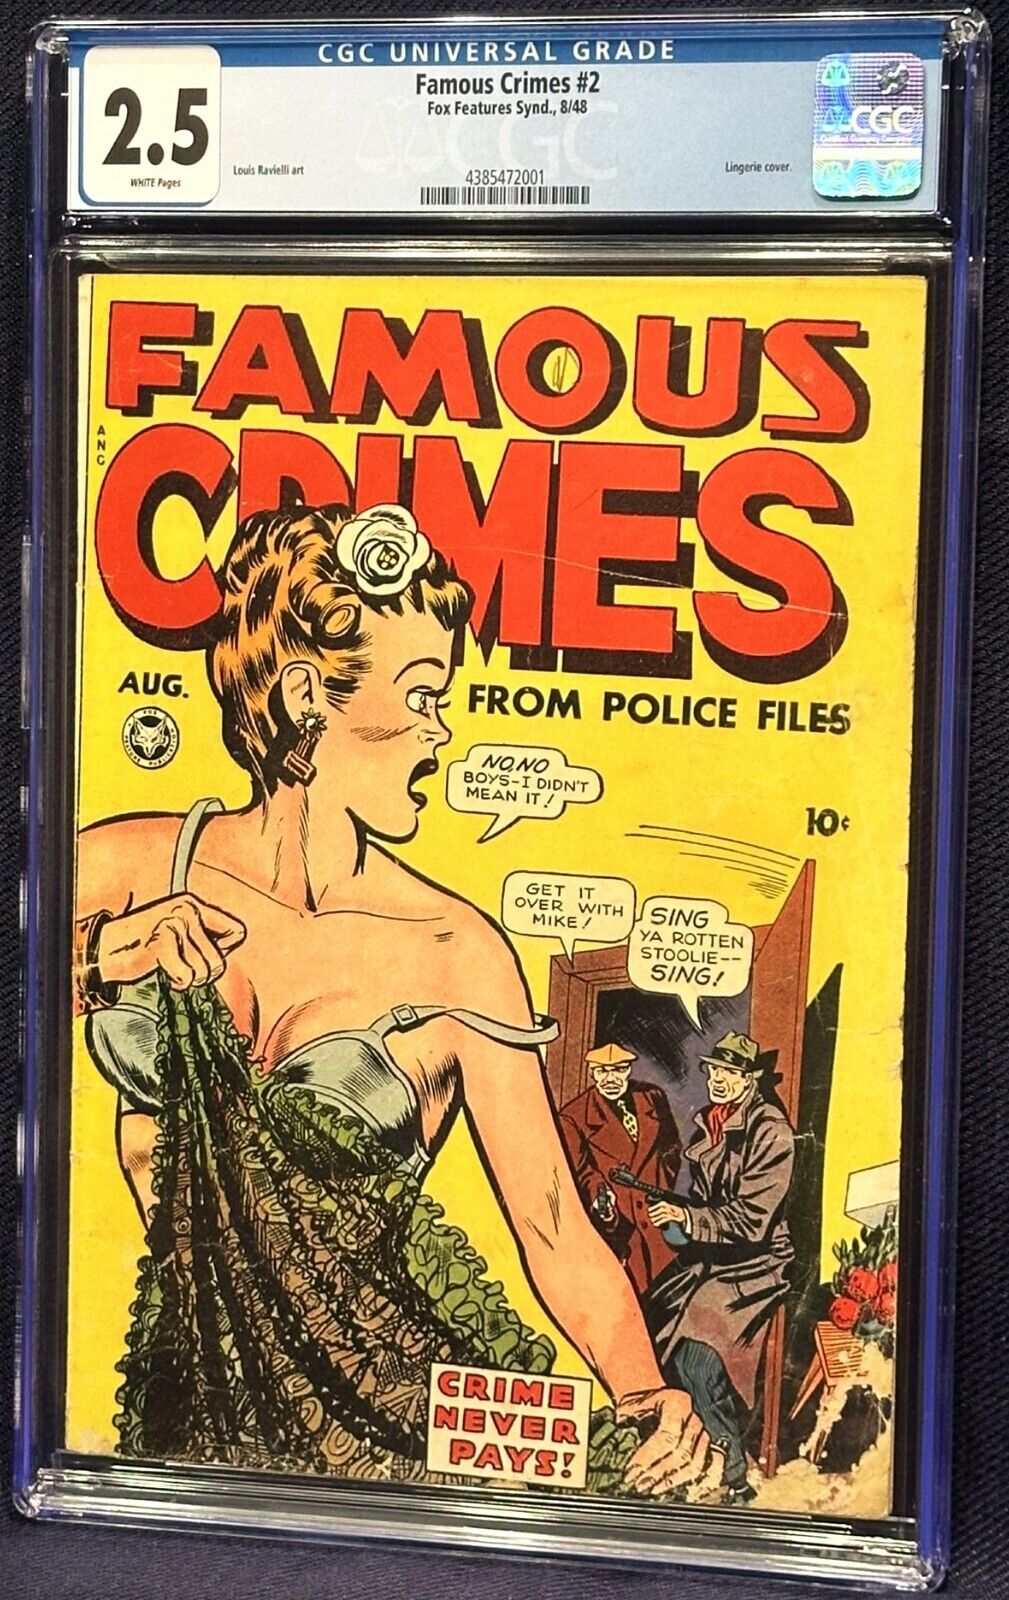 FAMOUS CRIMES #2 (FOX 8/48) - CLASSIC LINGERIE COVER, WHITE PAGES